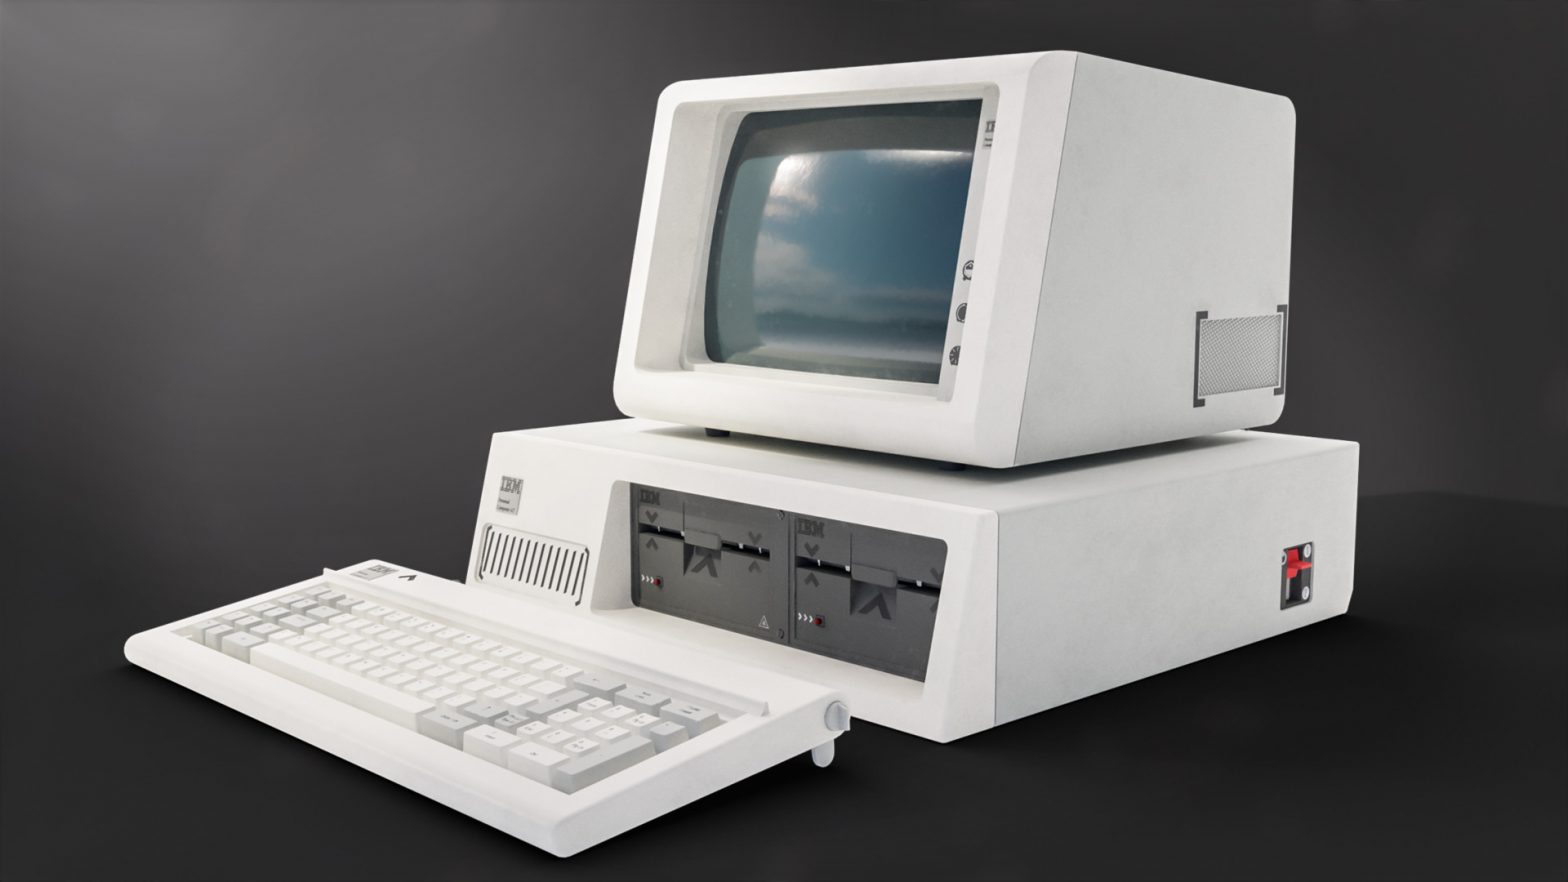 ibm personal computer 5150